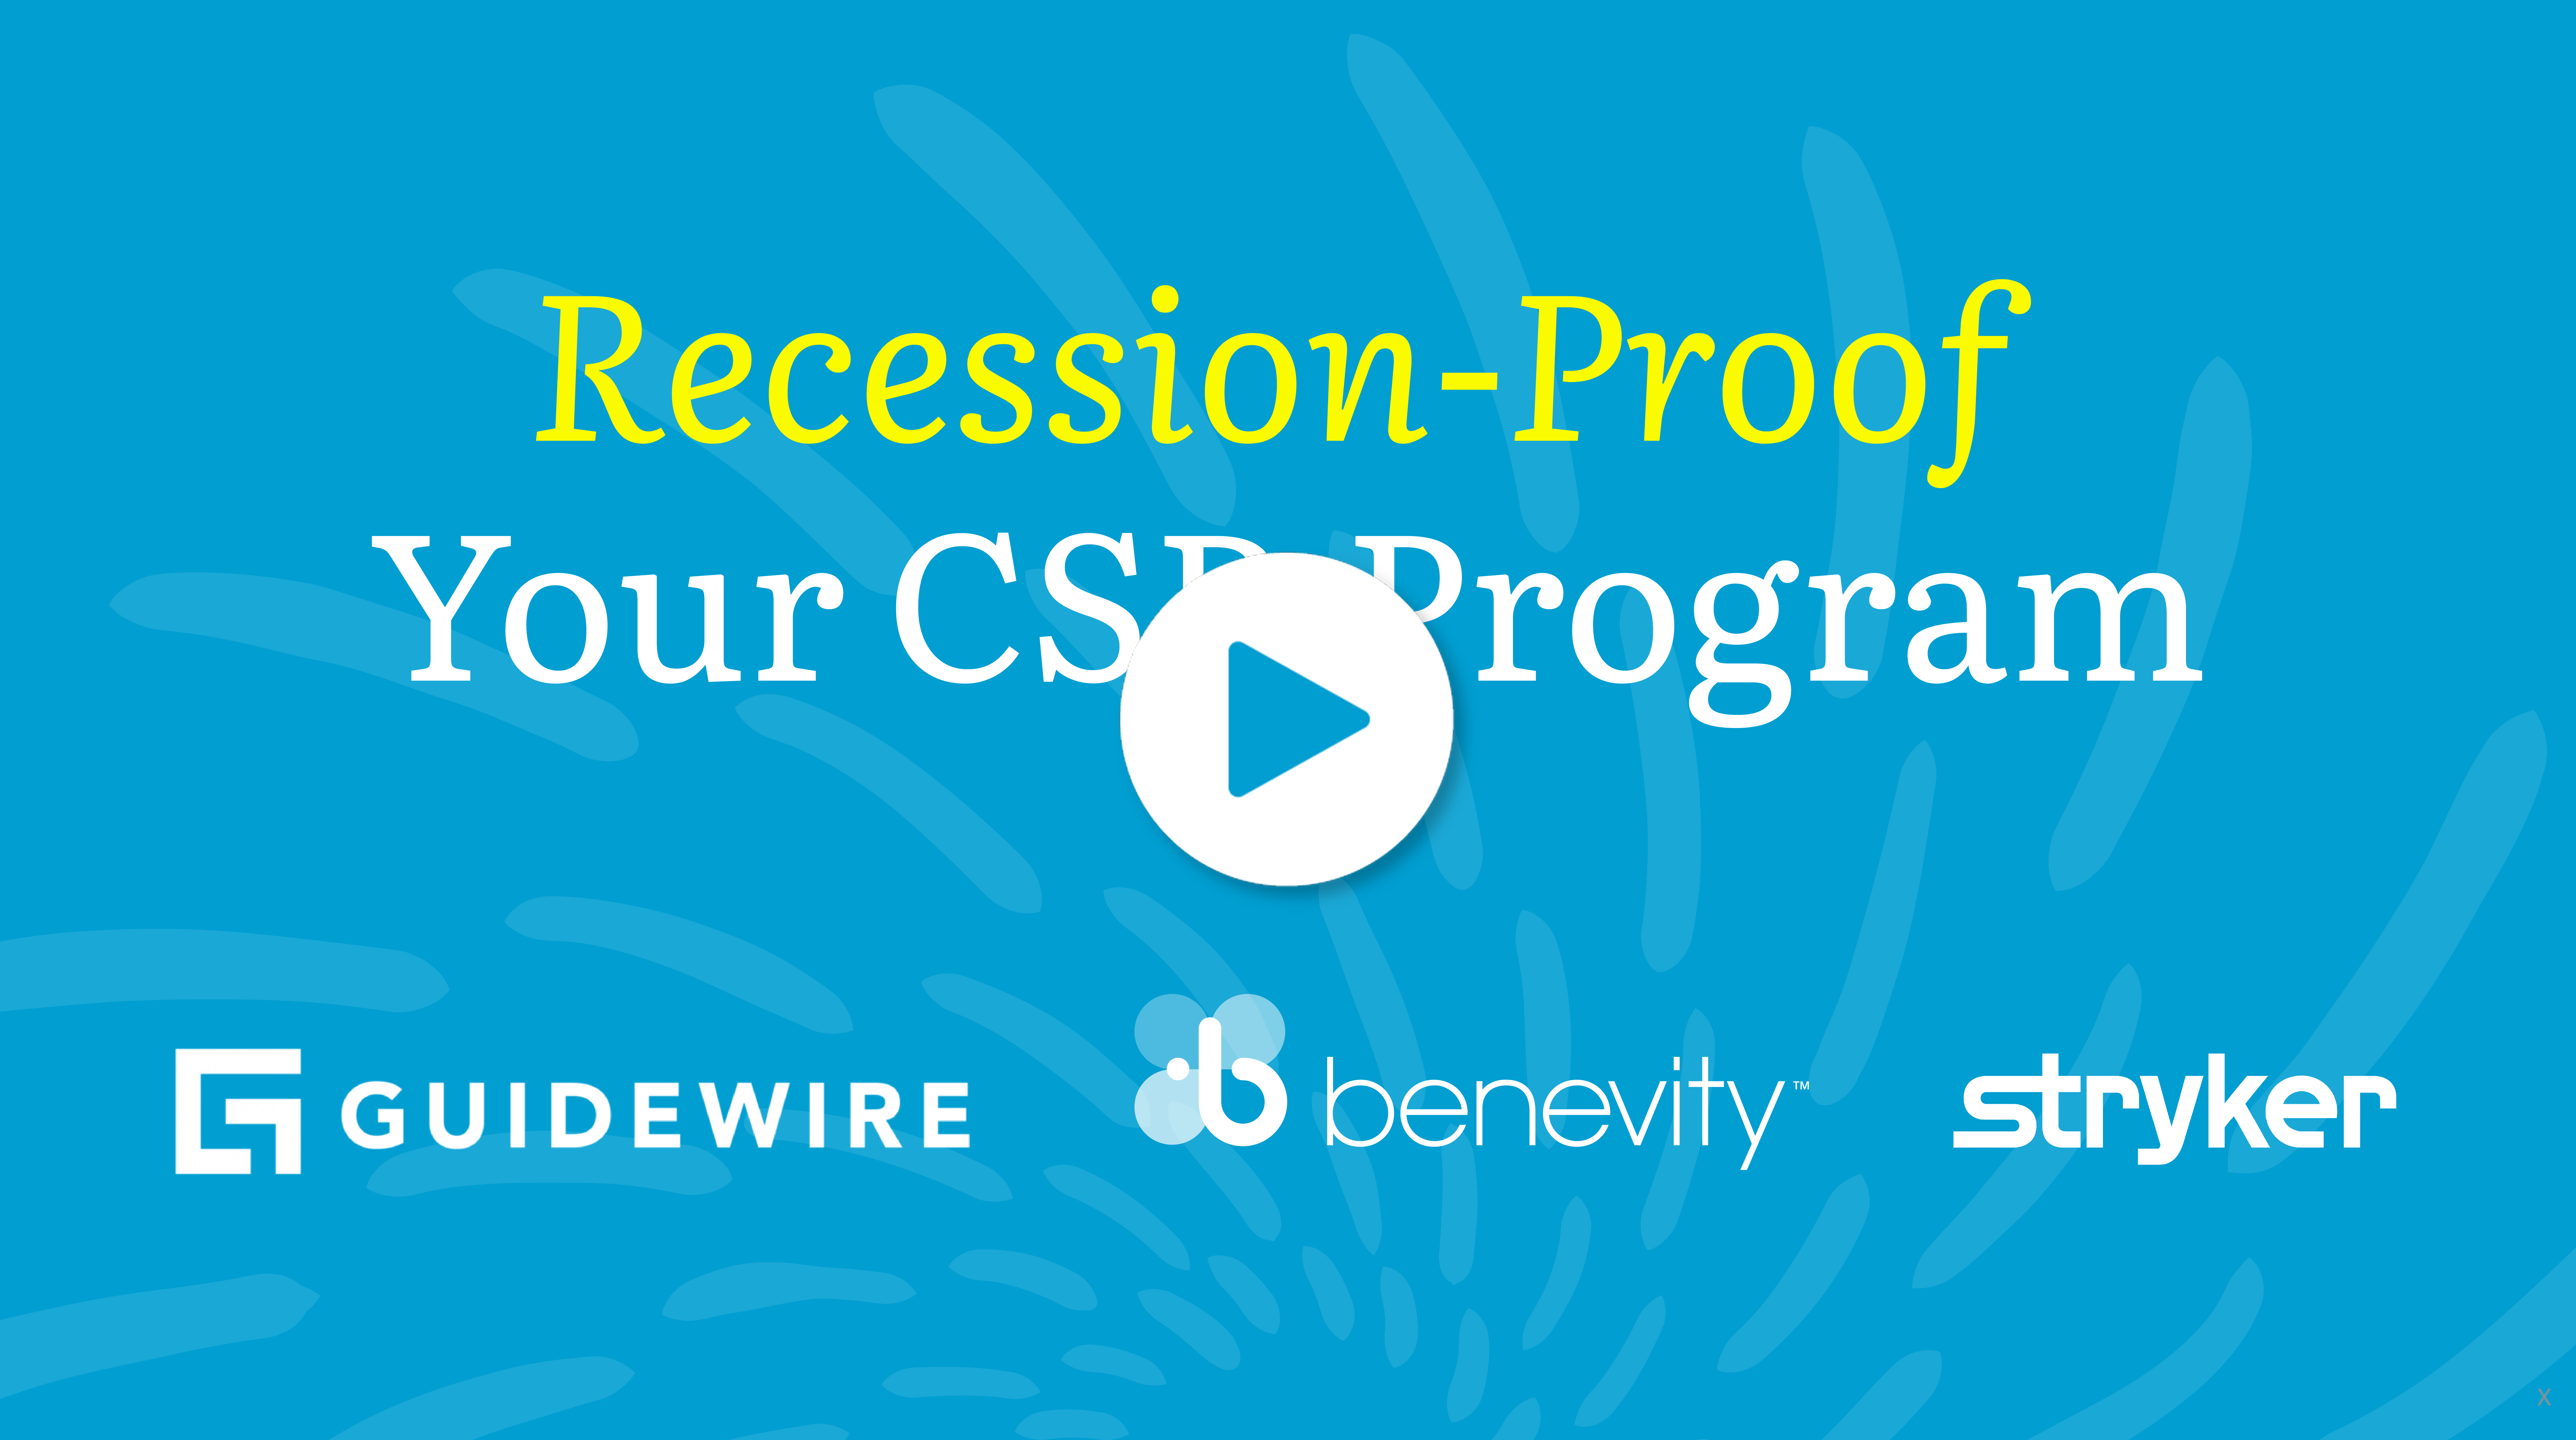 Recession-Proof Your CSR Program